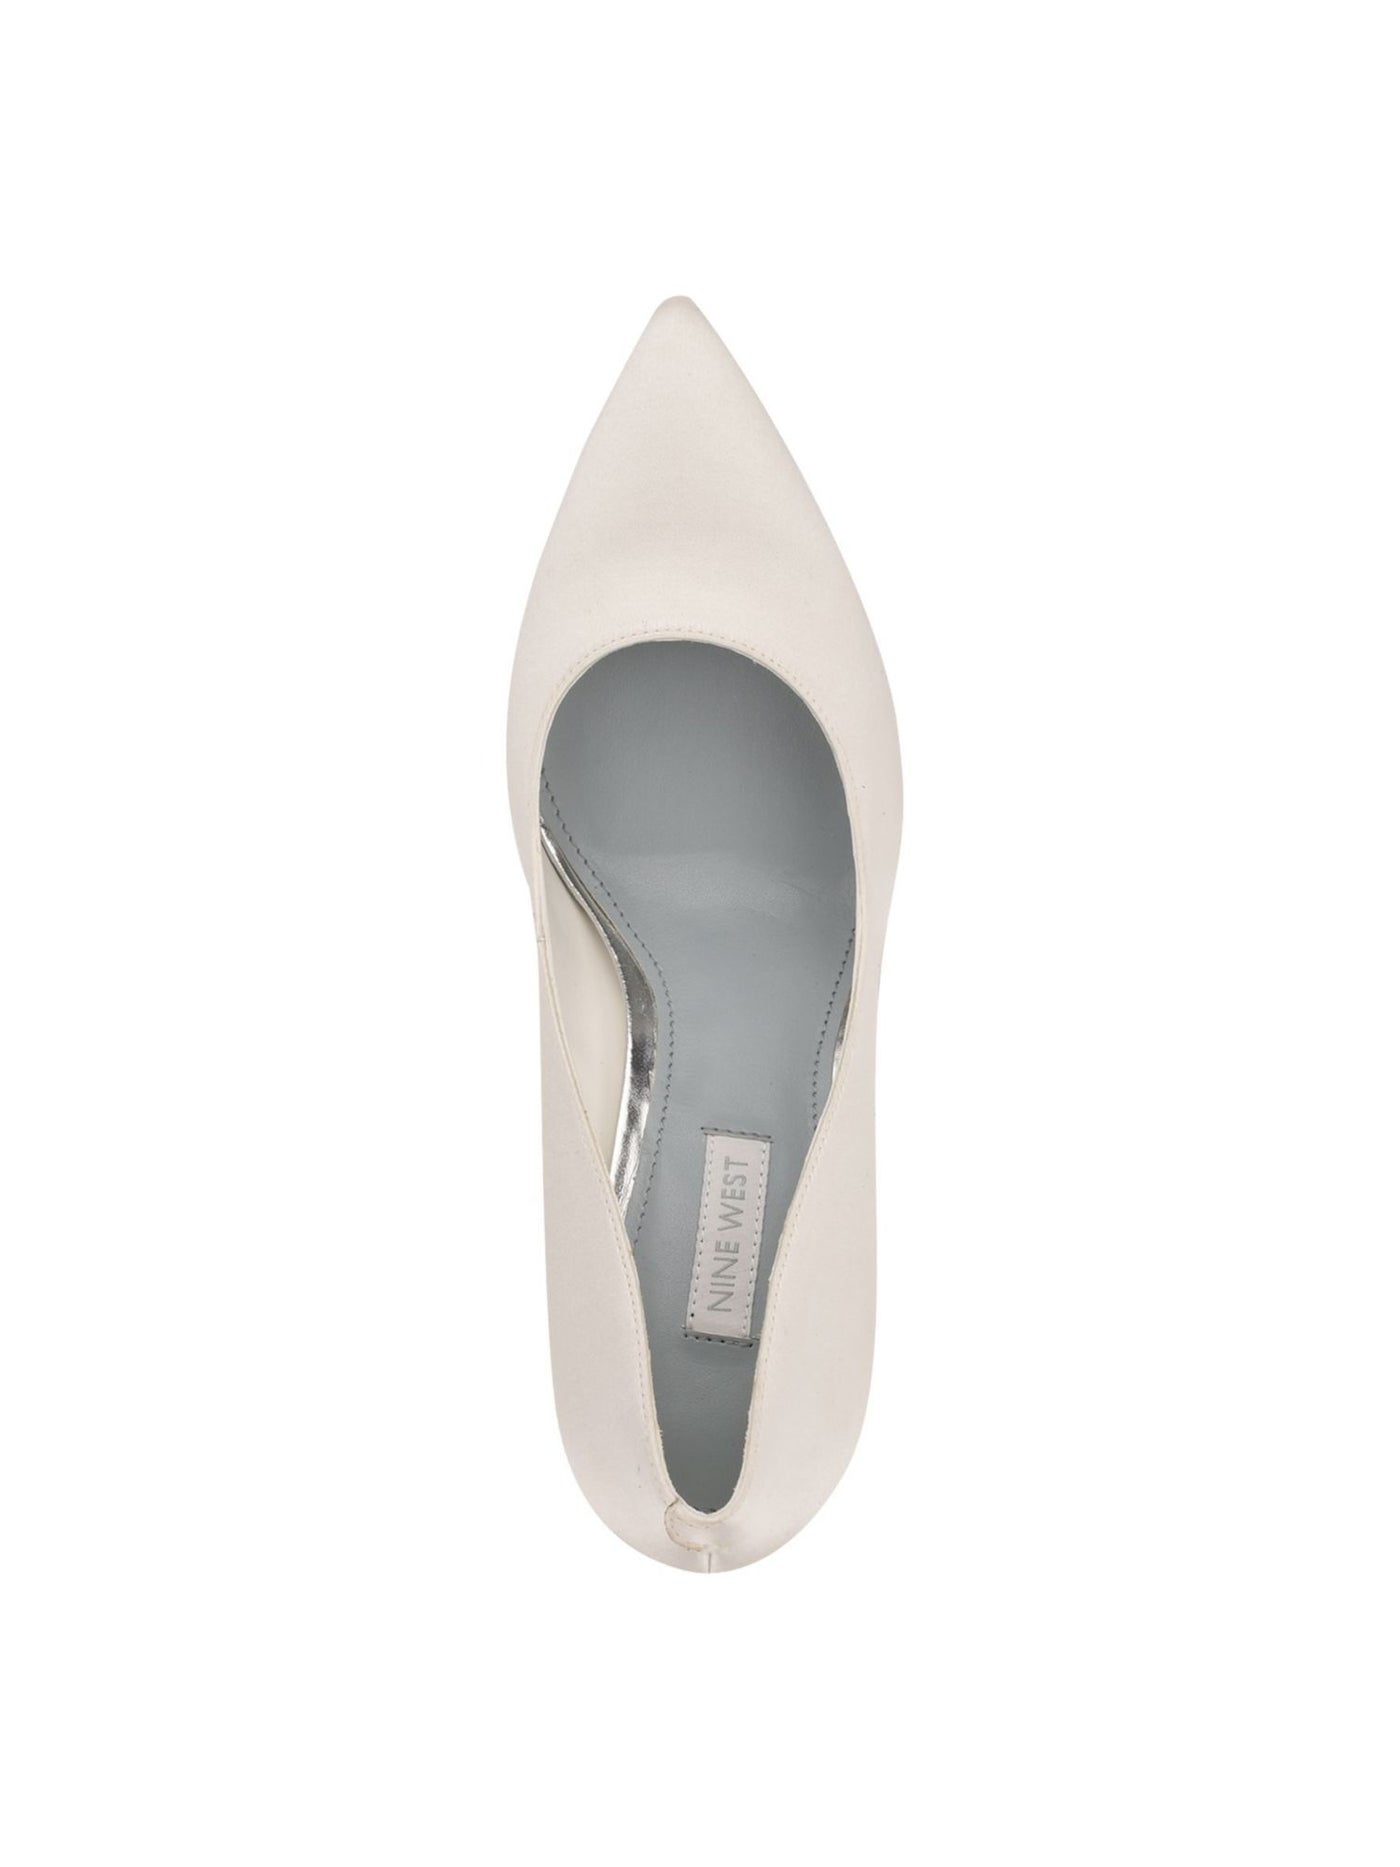 NINE WEST Womens Ivory Padded Ezra Pointed Toe Stiletto Slip On Dress Pumps Shoes 10.5 M